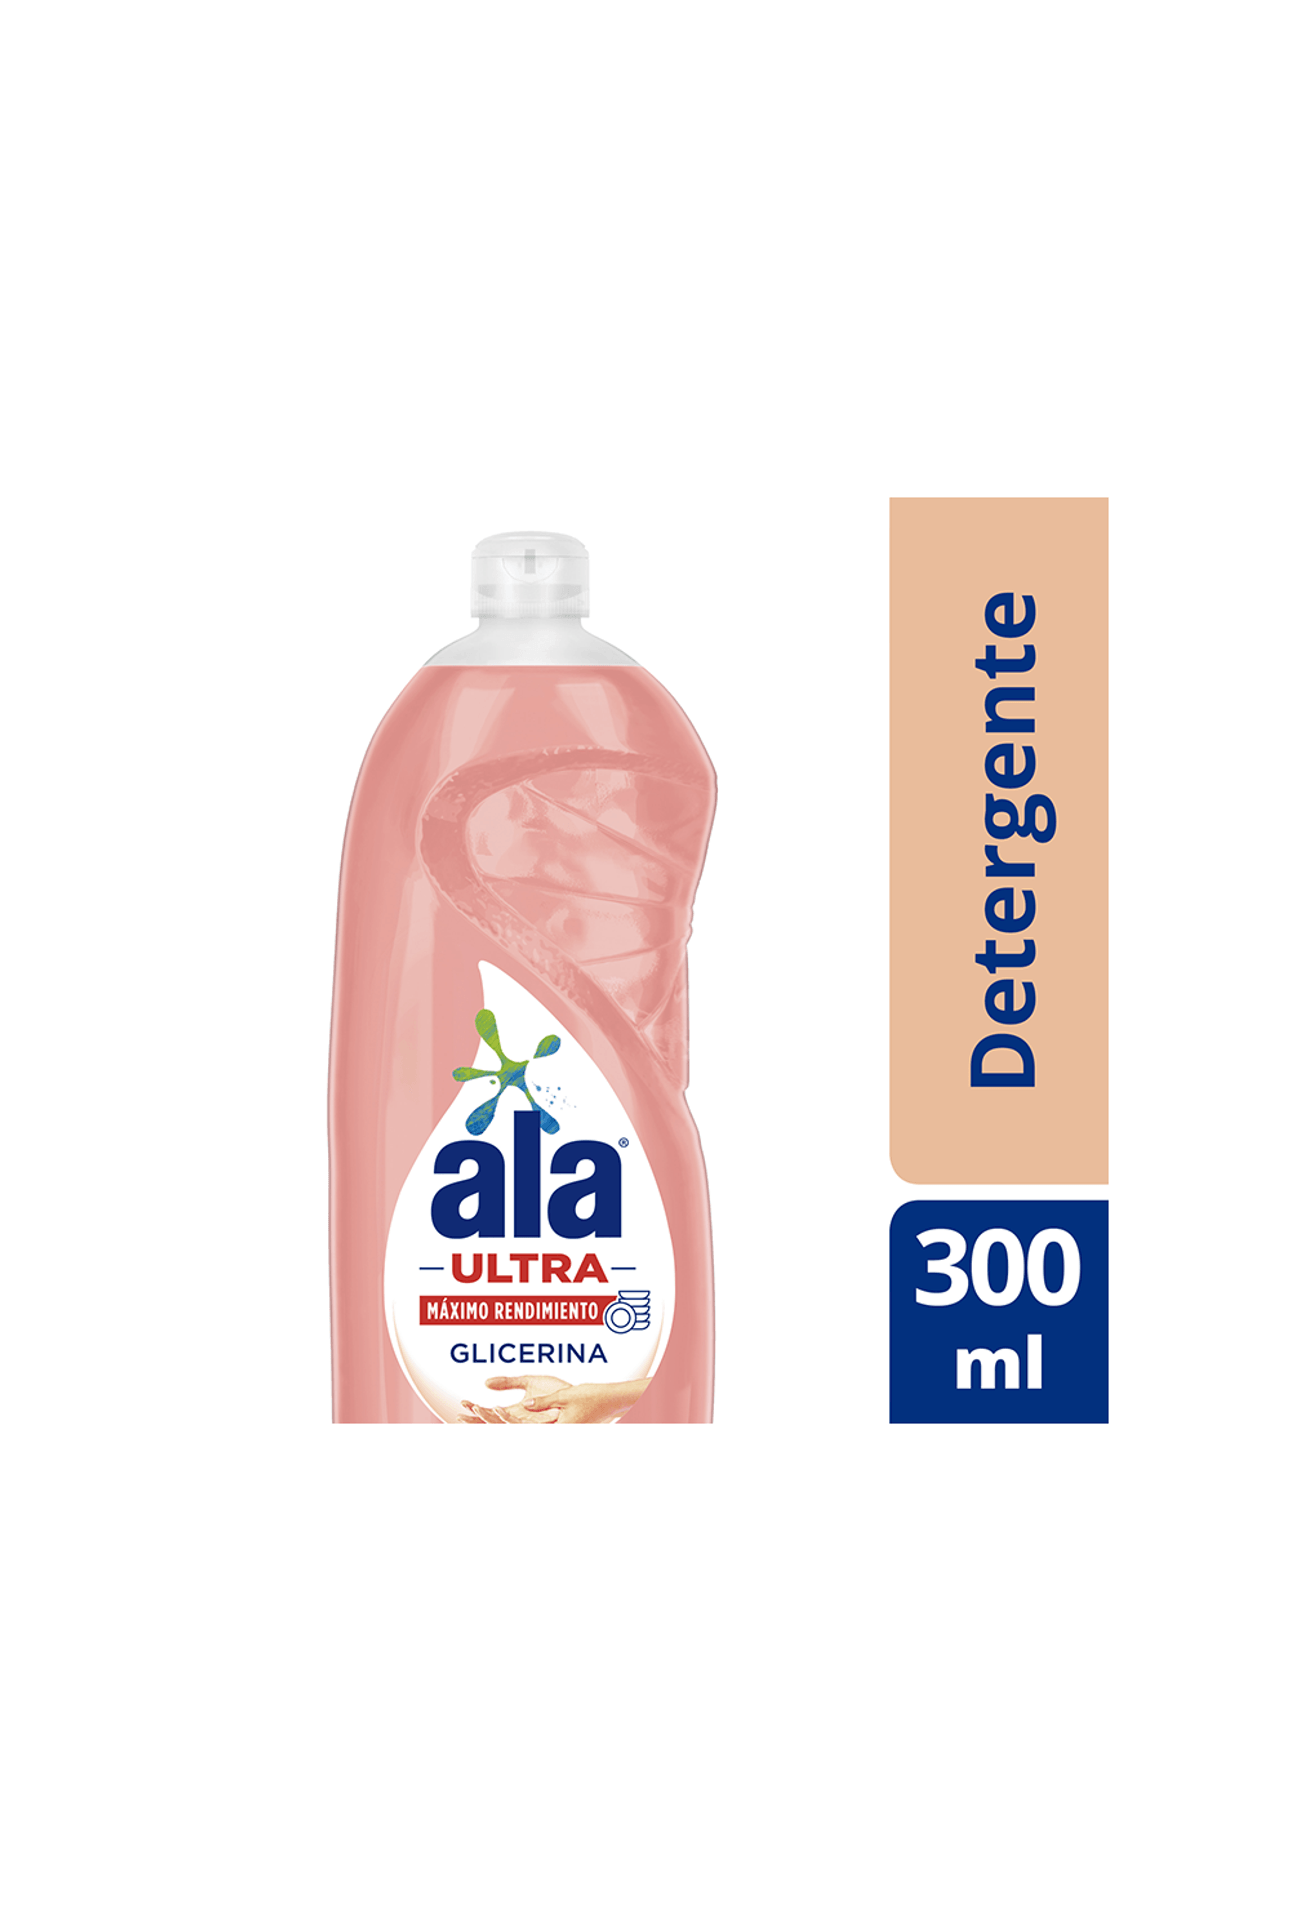 Ala-Detergente-Ala-Ultra-Glicerina-x-300-ml-7791290792654_img1